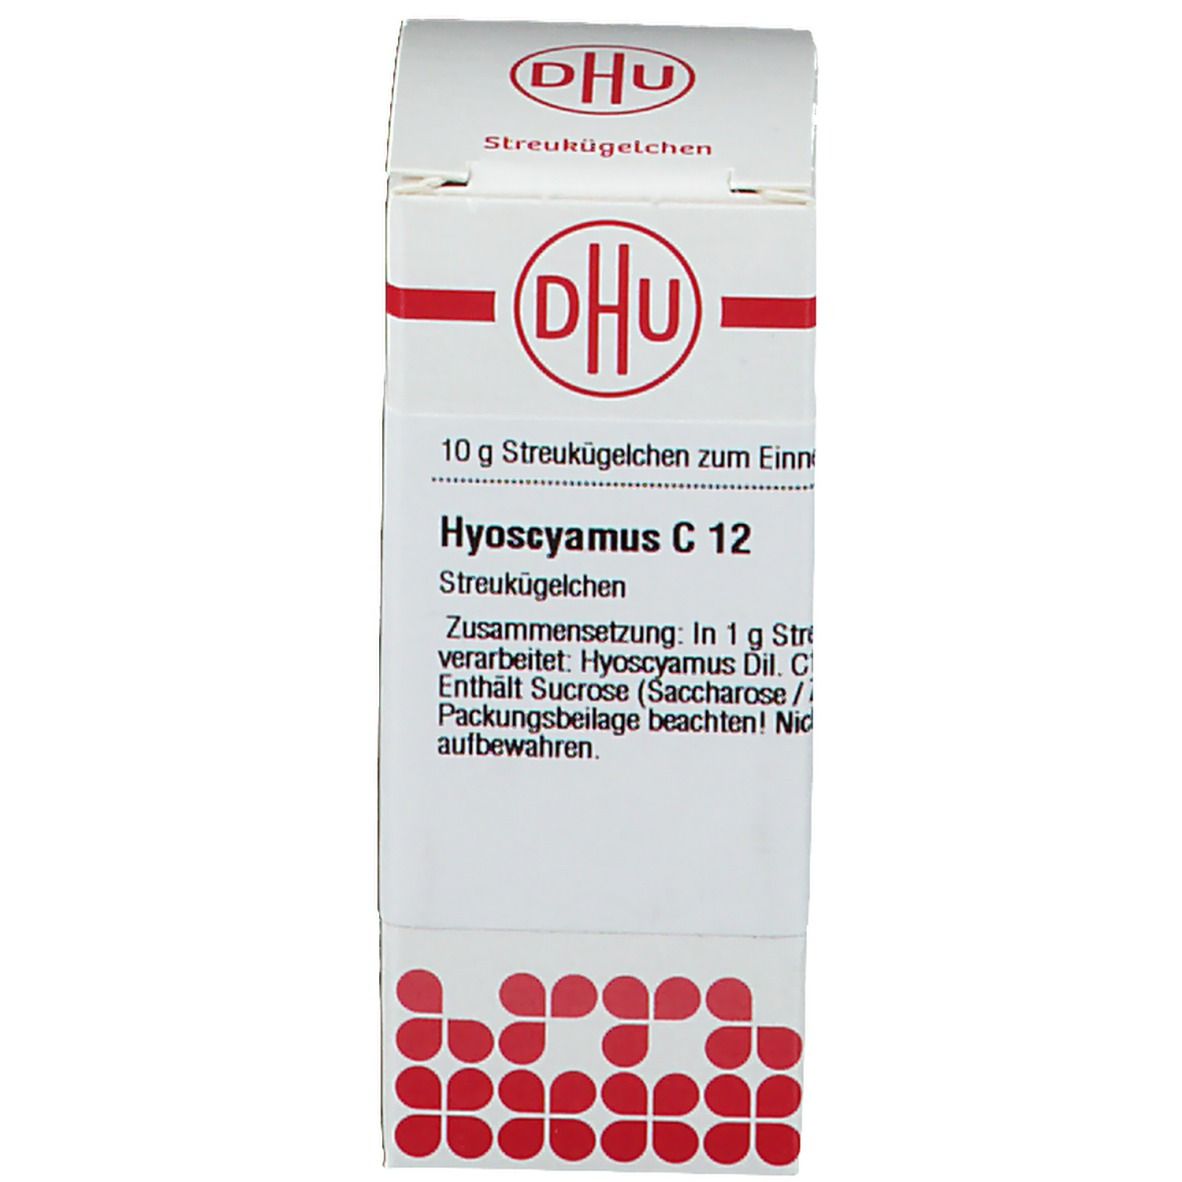 DHU Hyosyamus C12